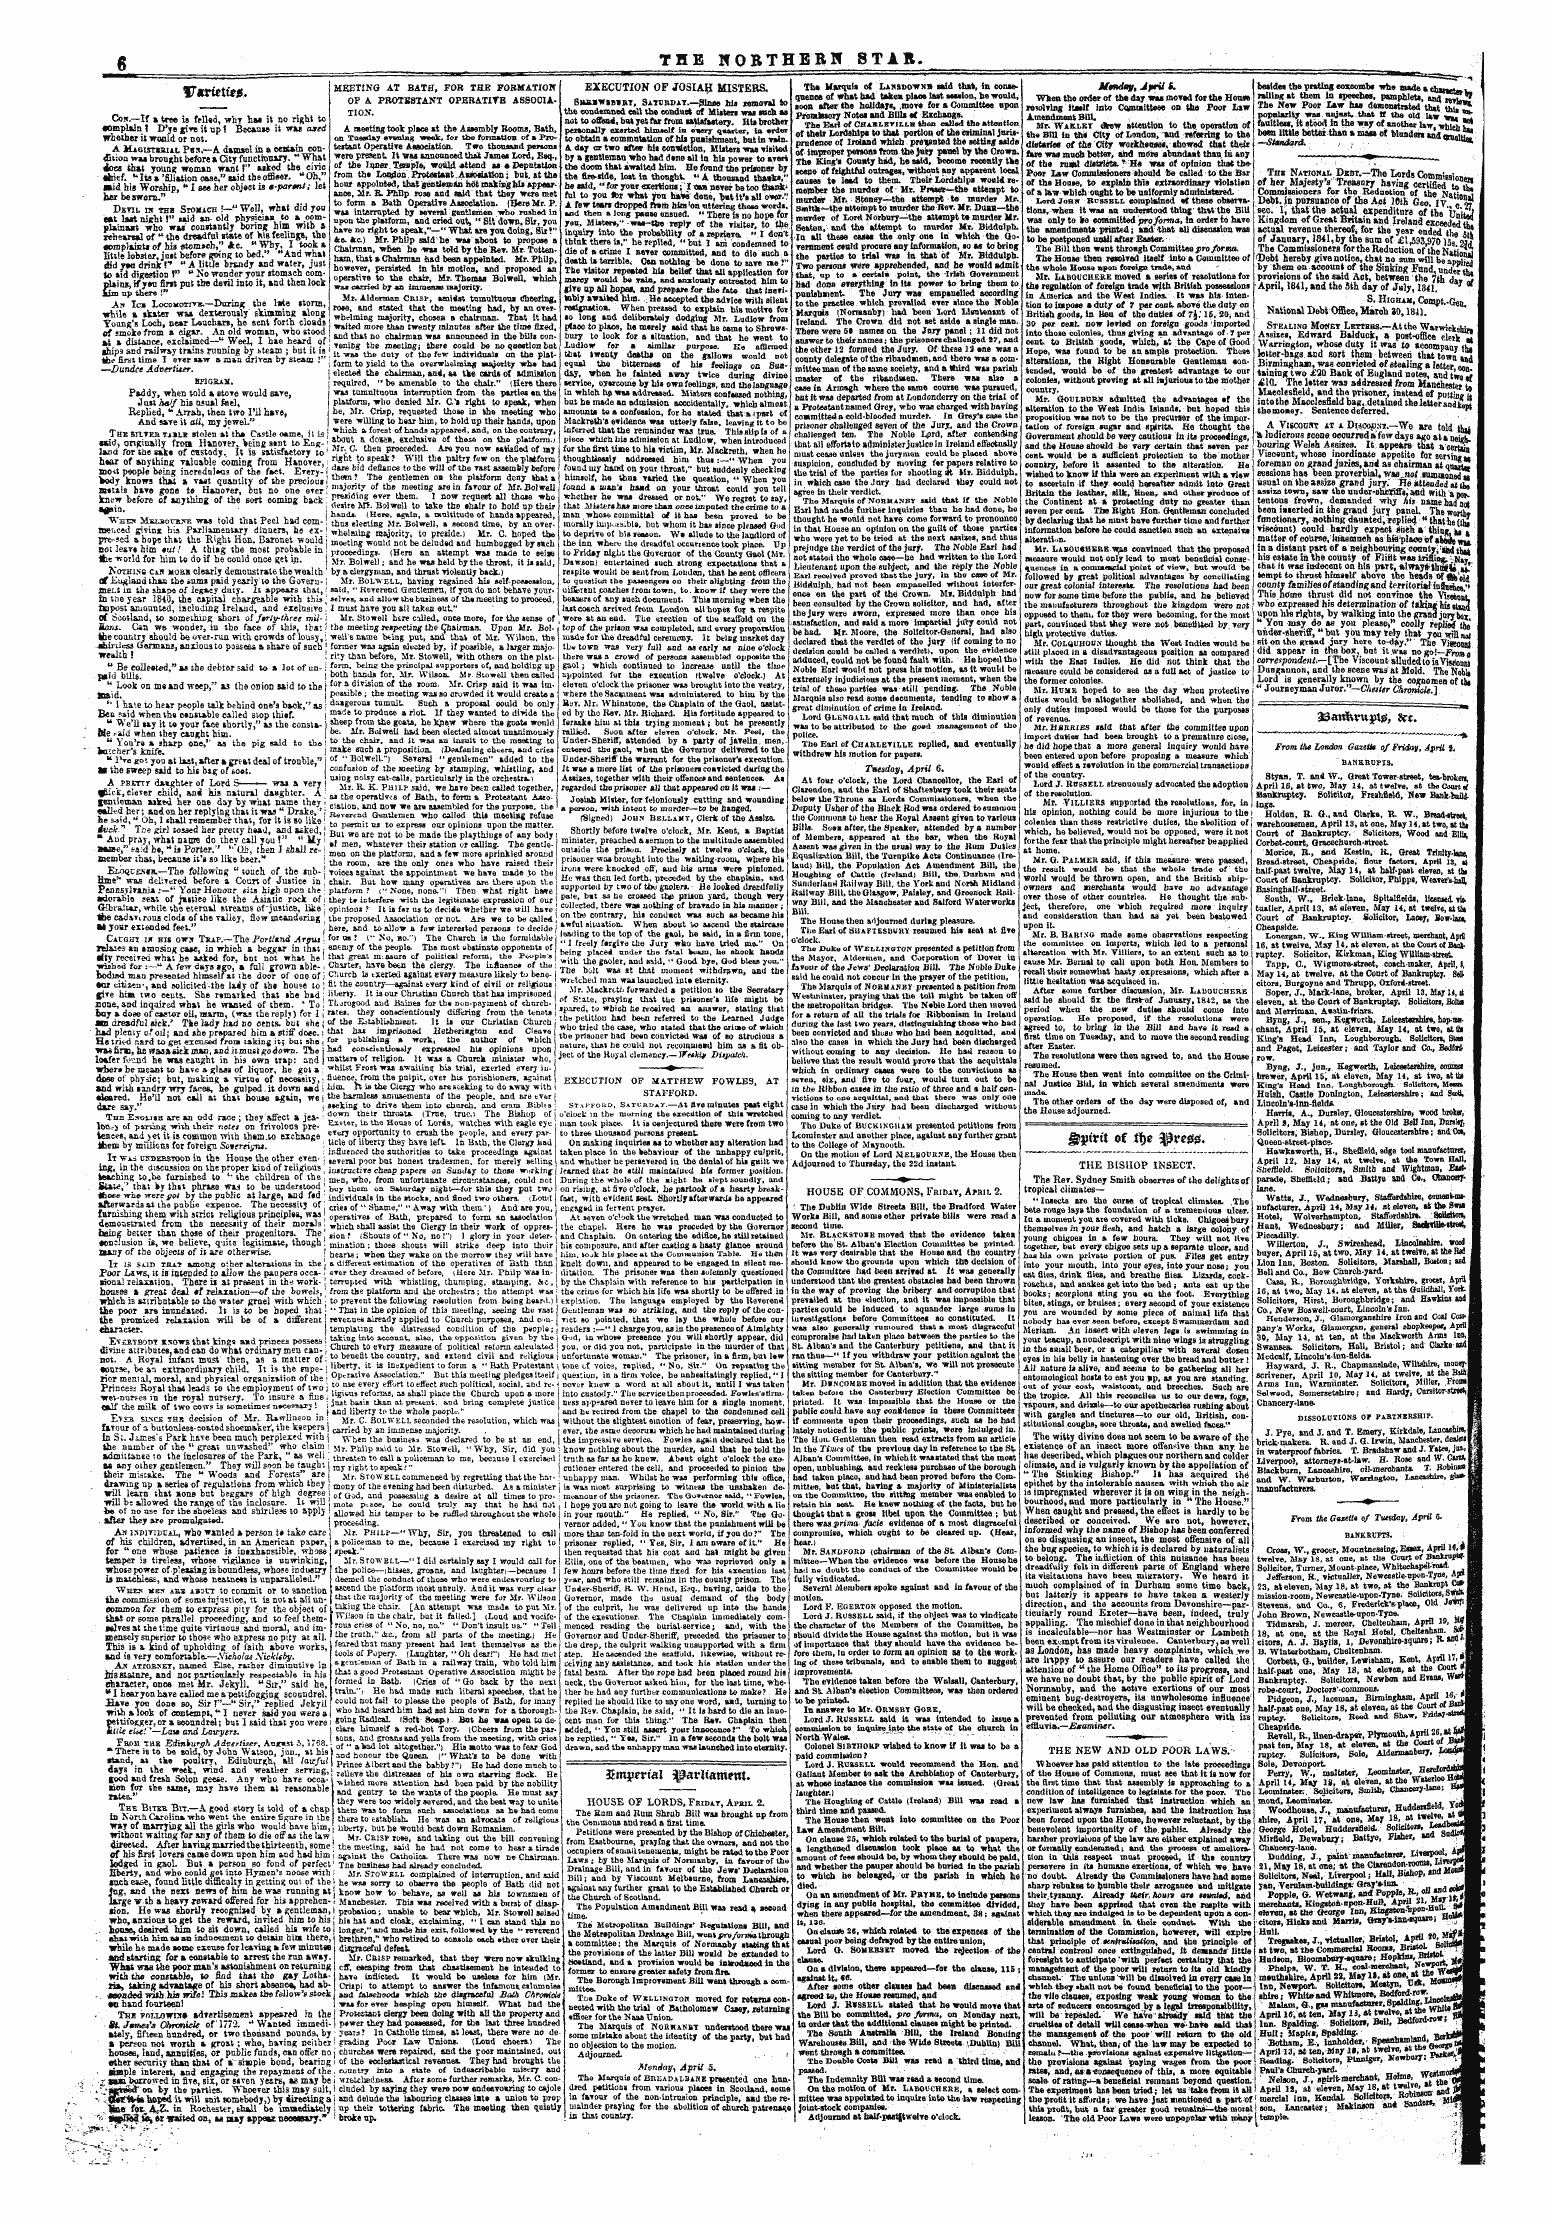 Northern Star (1837-1852): jS F Y, 4th edition - Tr*Riettea